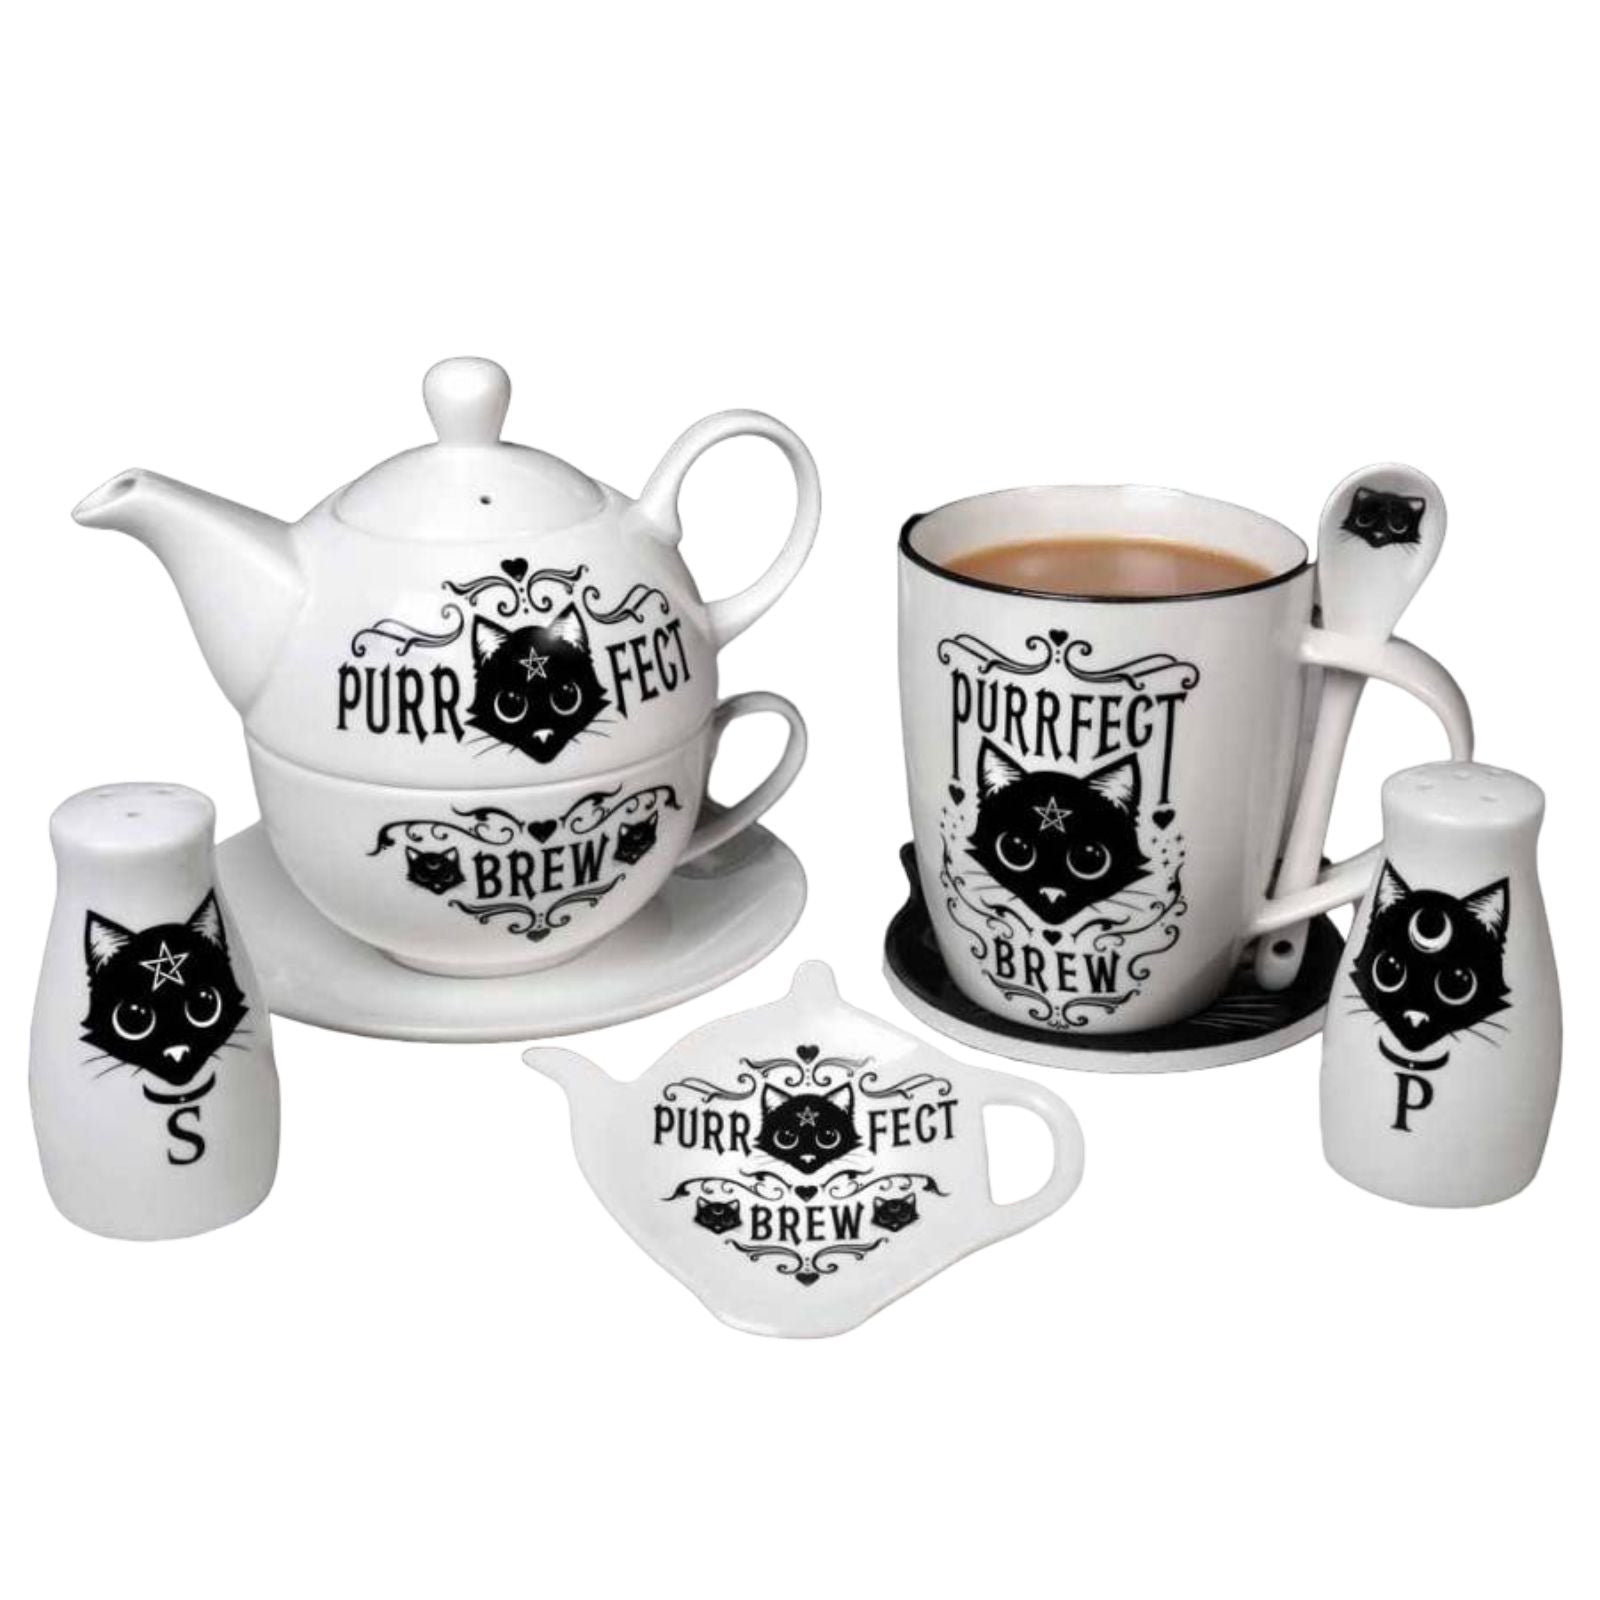 Alchemy England Purrfect Brew Ceramic Mug and Spoon Set